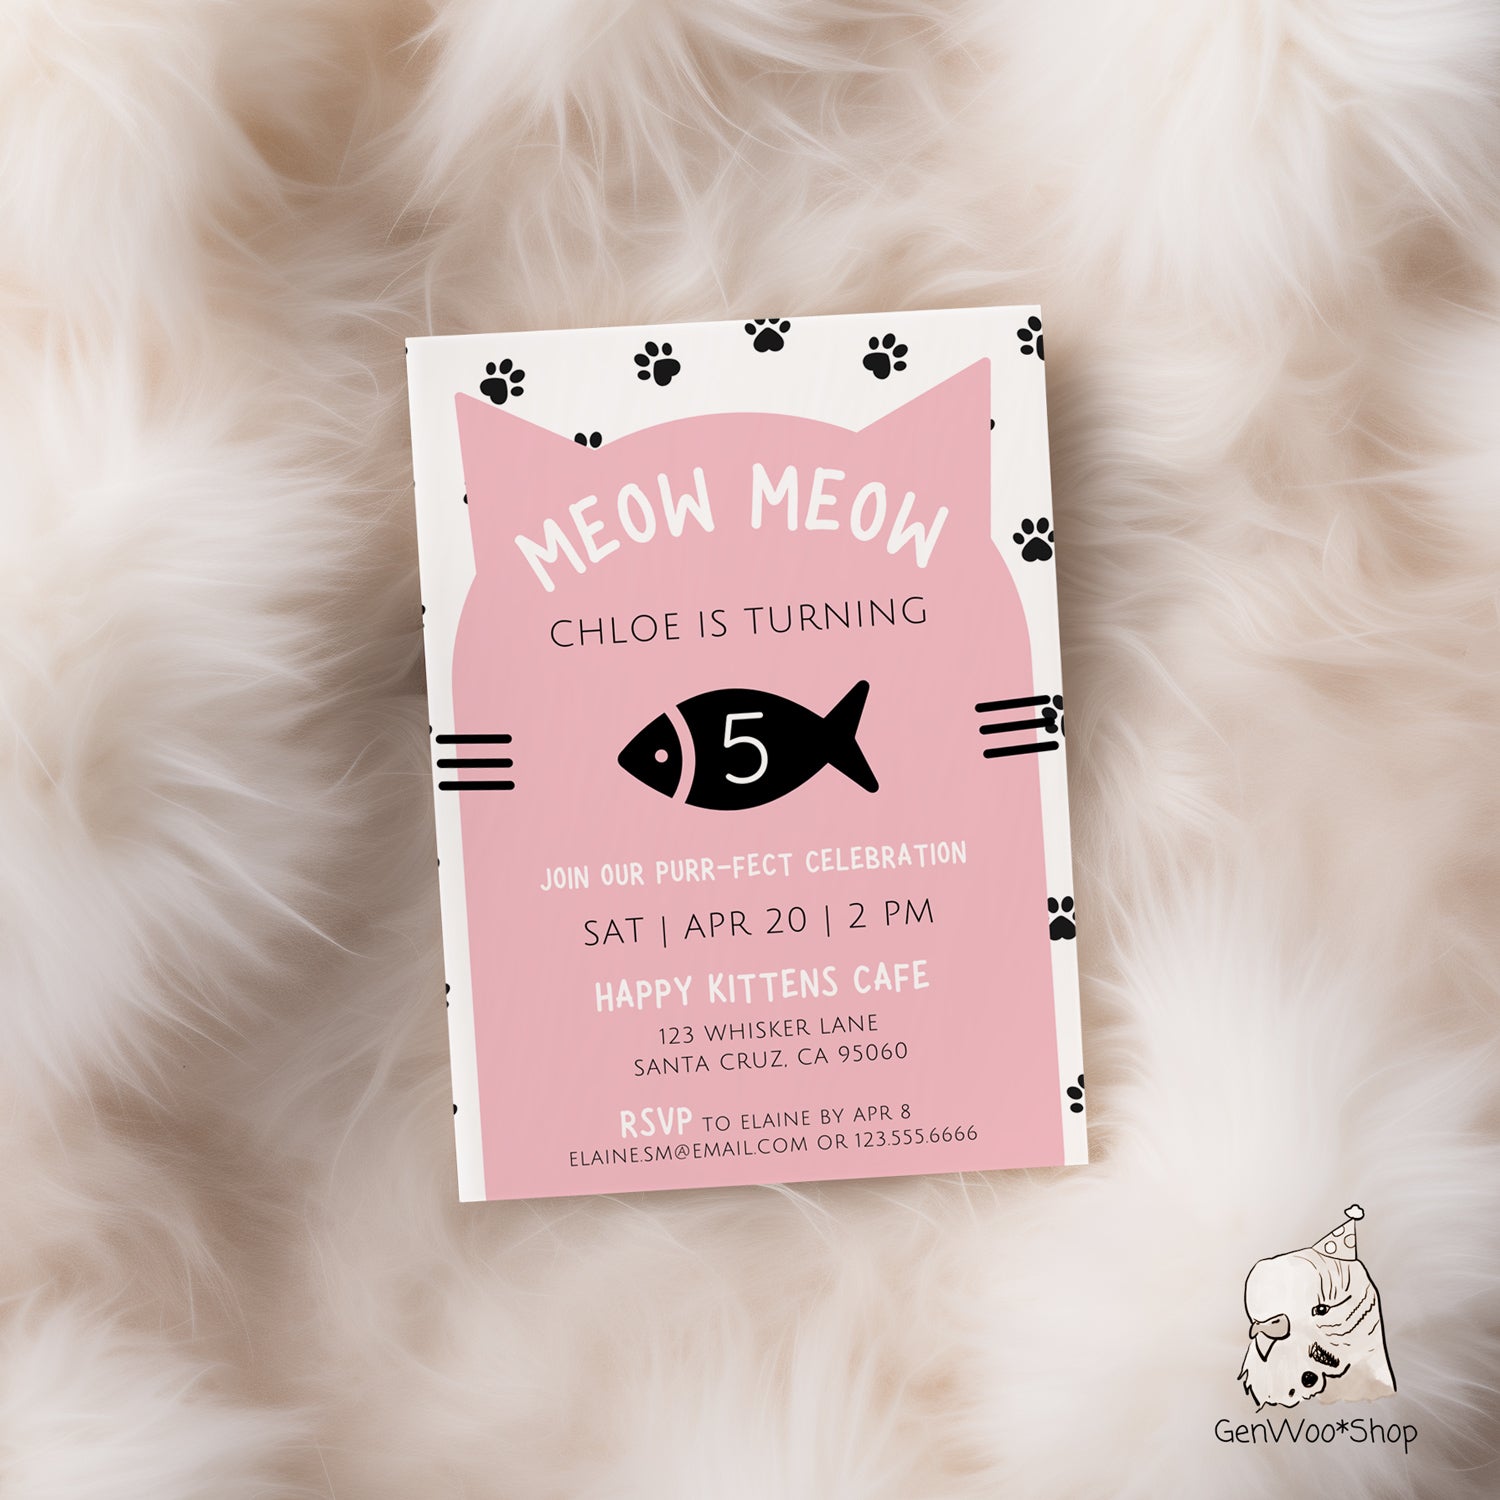 Editable Digital Meow Meow Cat Birthday Party Invitation - Pet Cat Kitty Kitten Birthday - Kids Birthday Invite 